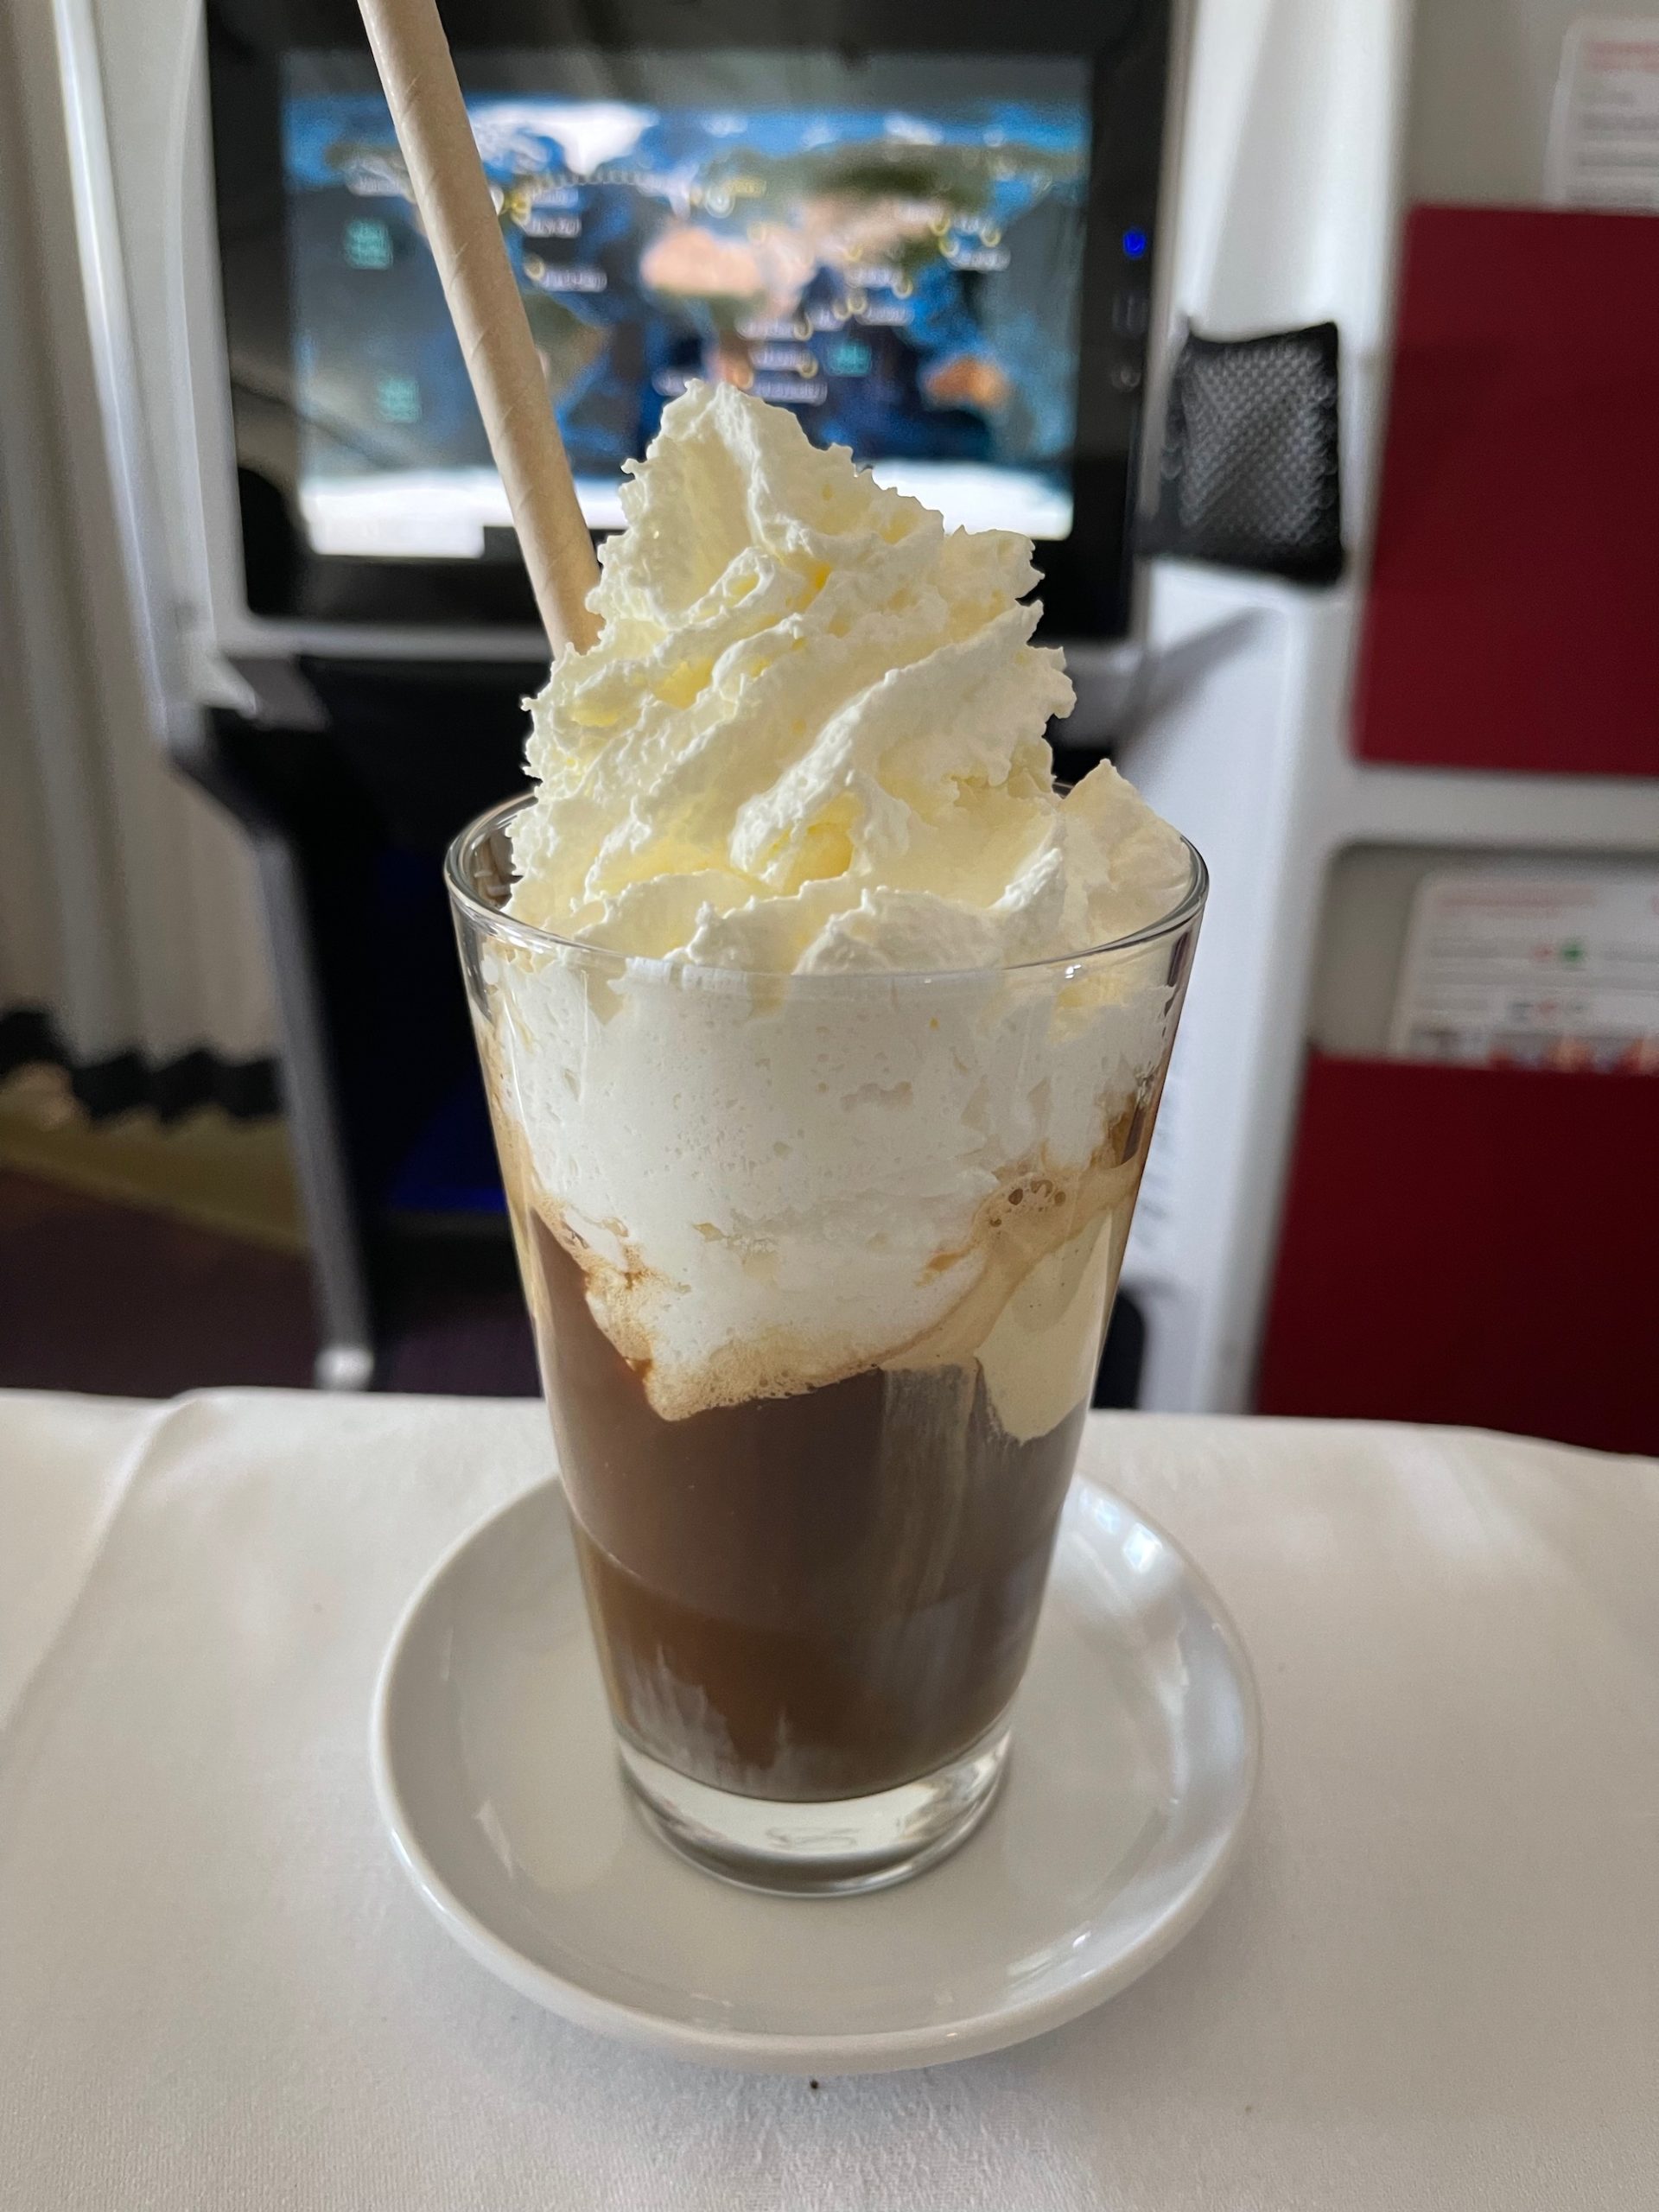 a glass of chocolate milkshake with whipped cream